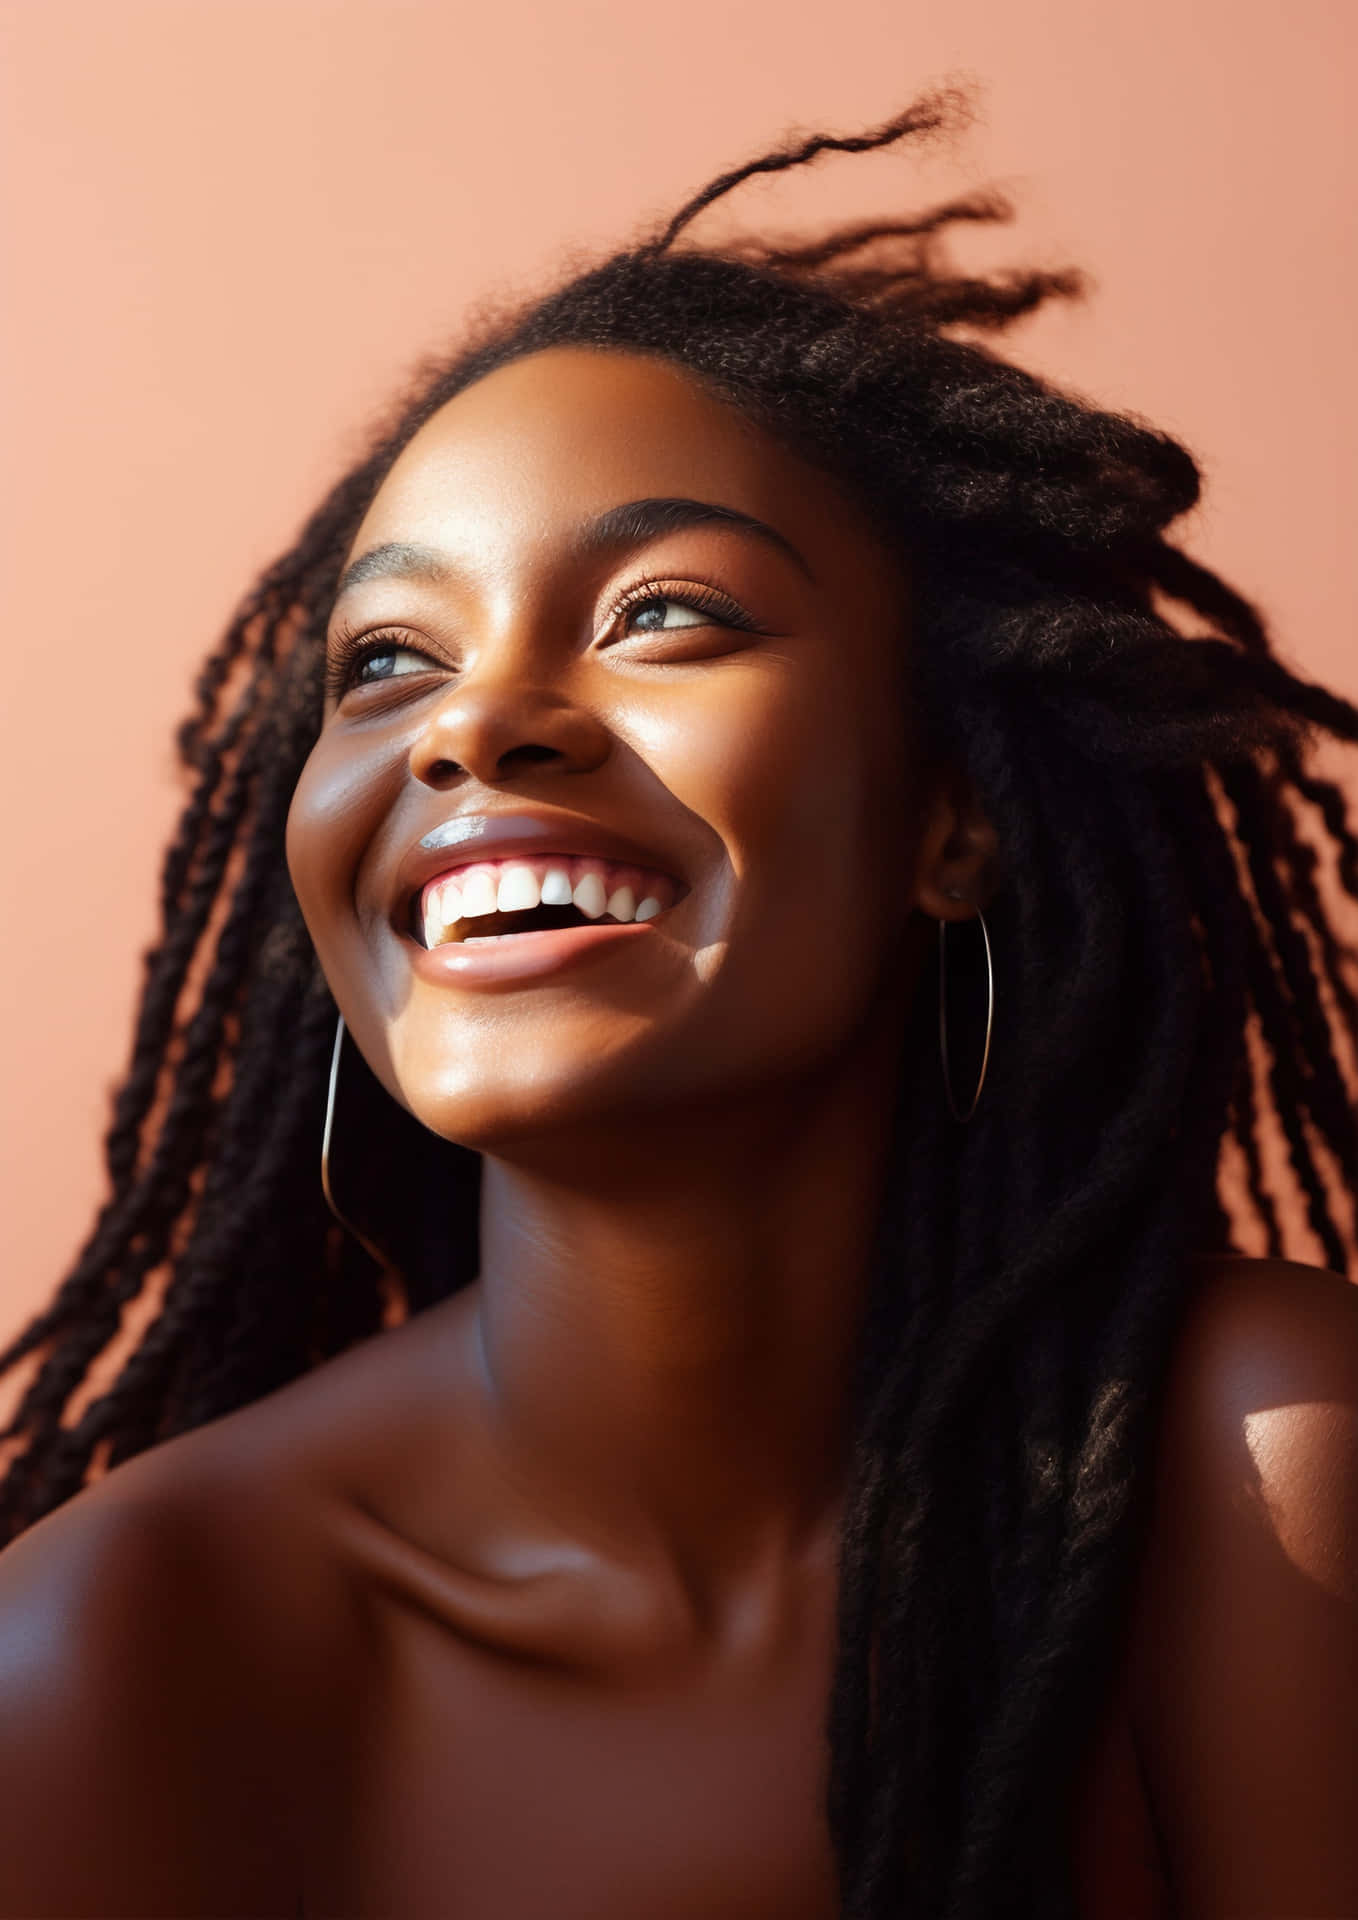 Radiant Smile Ebony Woman Wallpaper